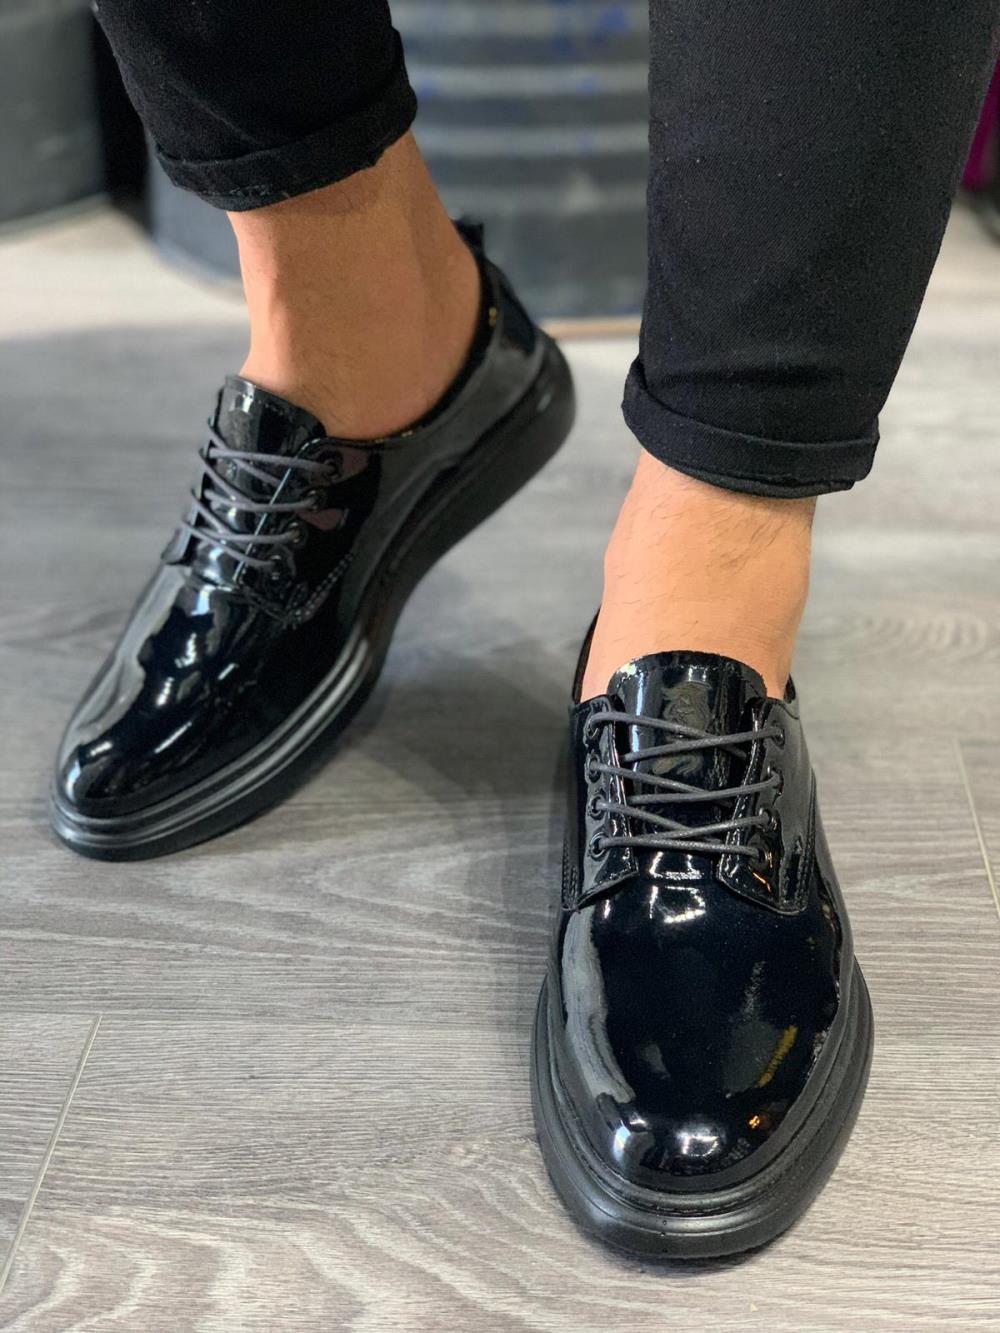 CLZ941  Klasik Erkek Ayakkabı  Siyah Rugan (Siyah Taban)